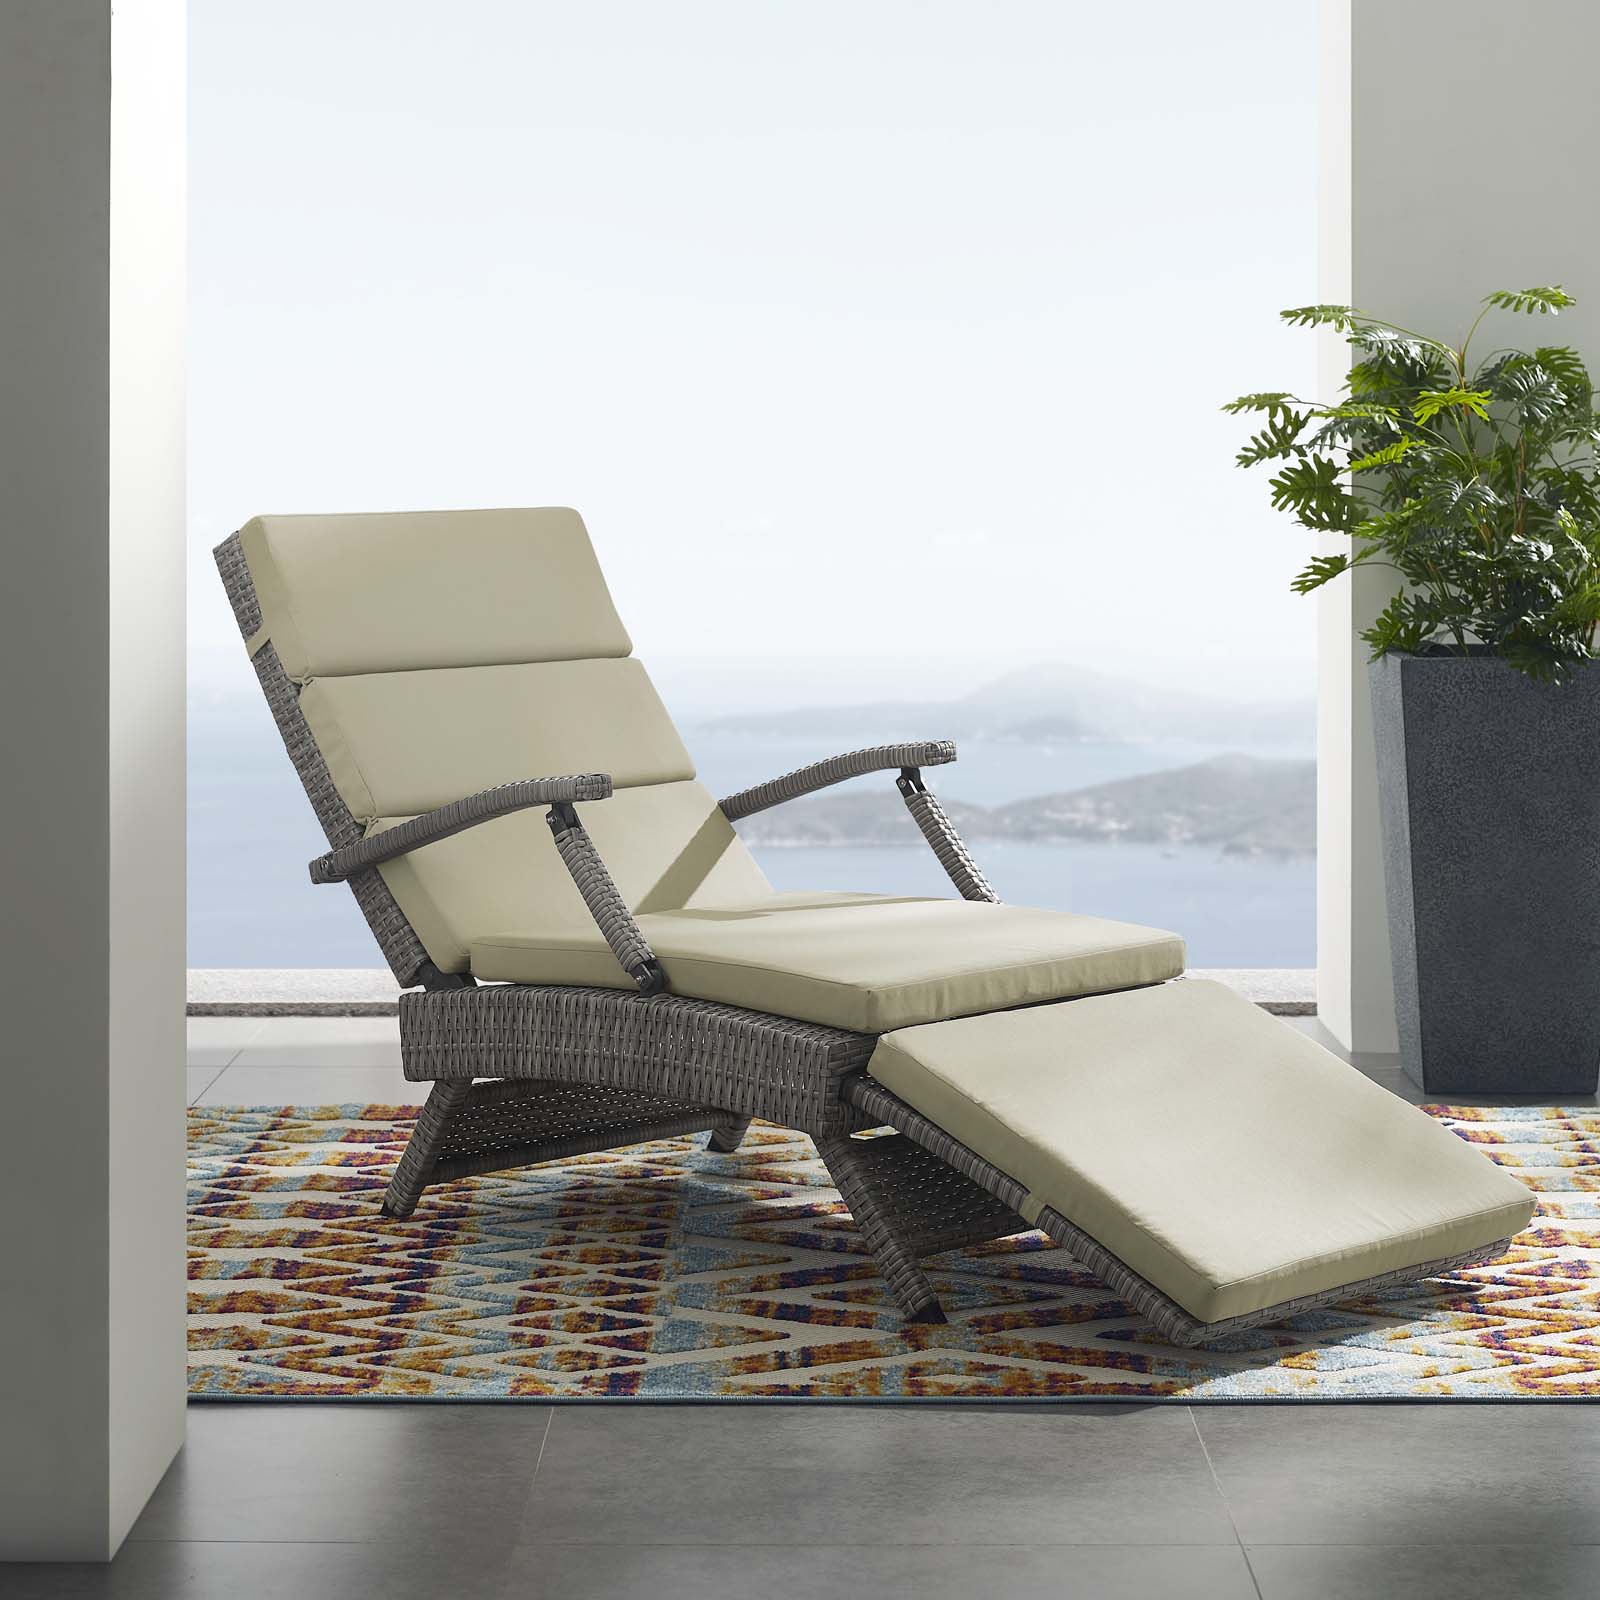 Modern Contemporary Urban Design Outdoor Patio Balcony Garden Furniture Lounge Chair Chaise, Rattan Wicker, Light Gray Beige - image 2 of 8